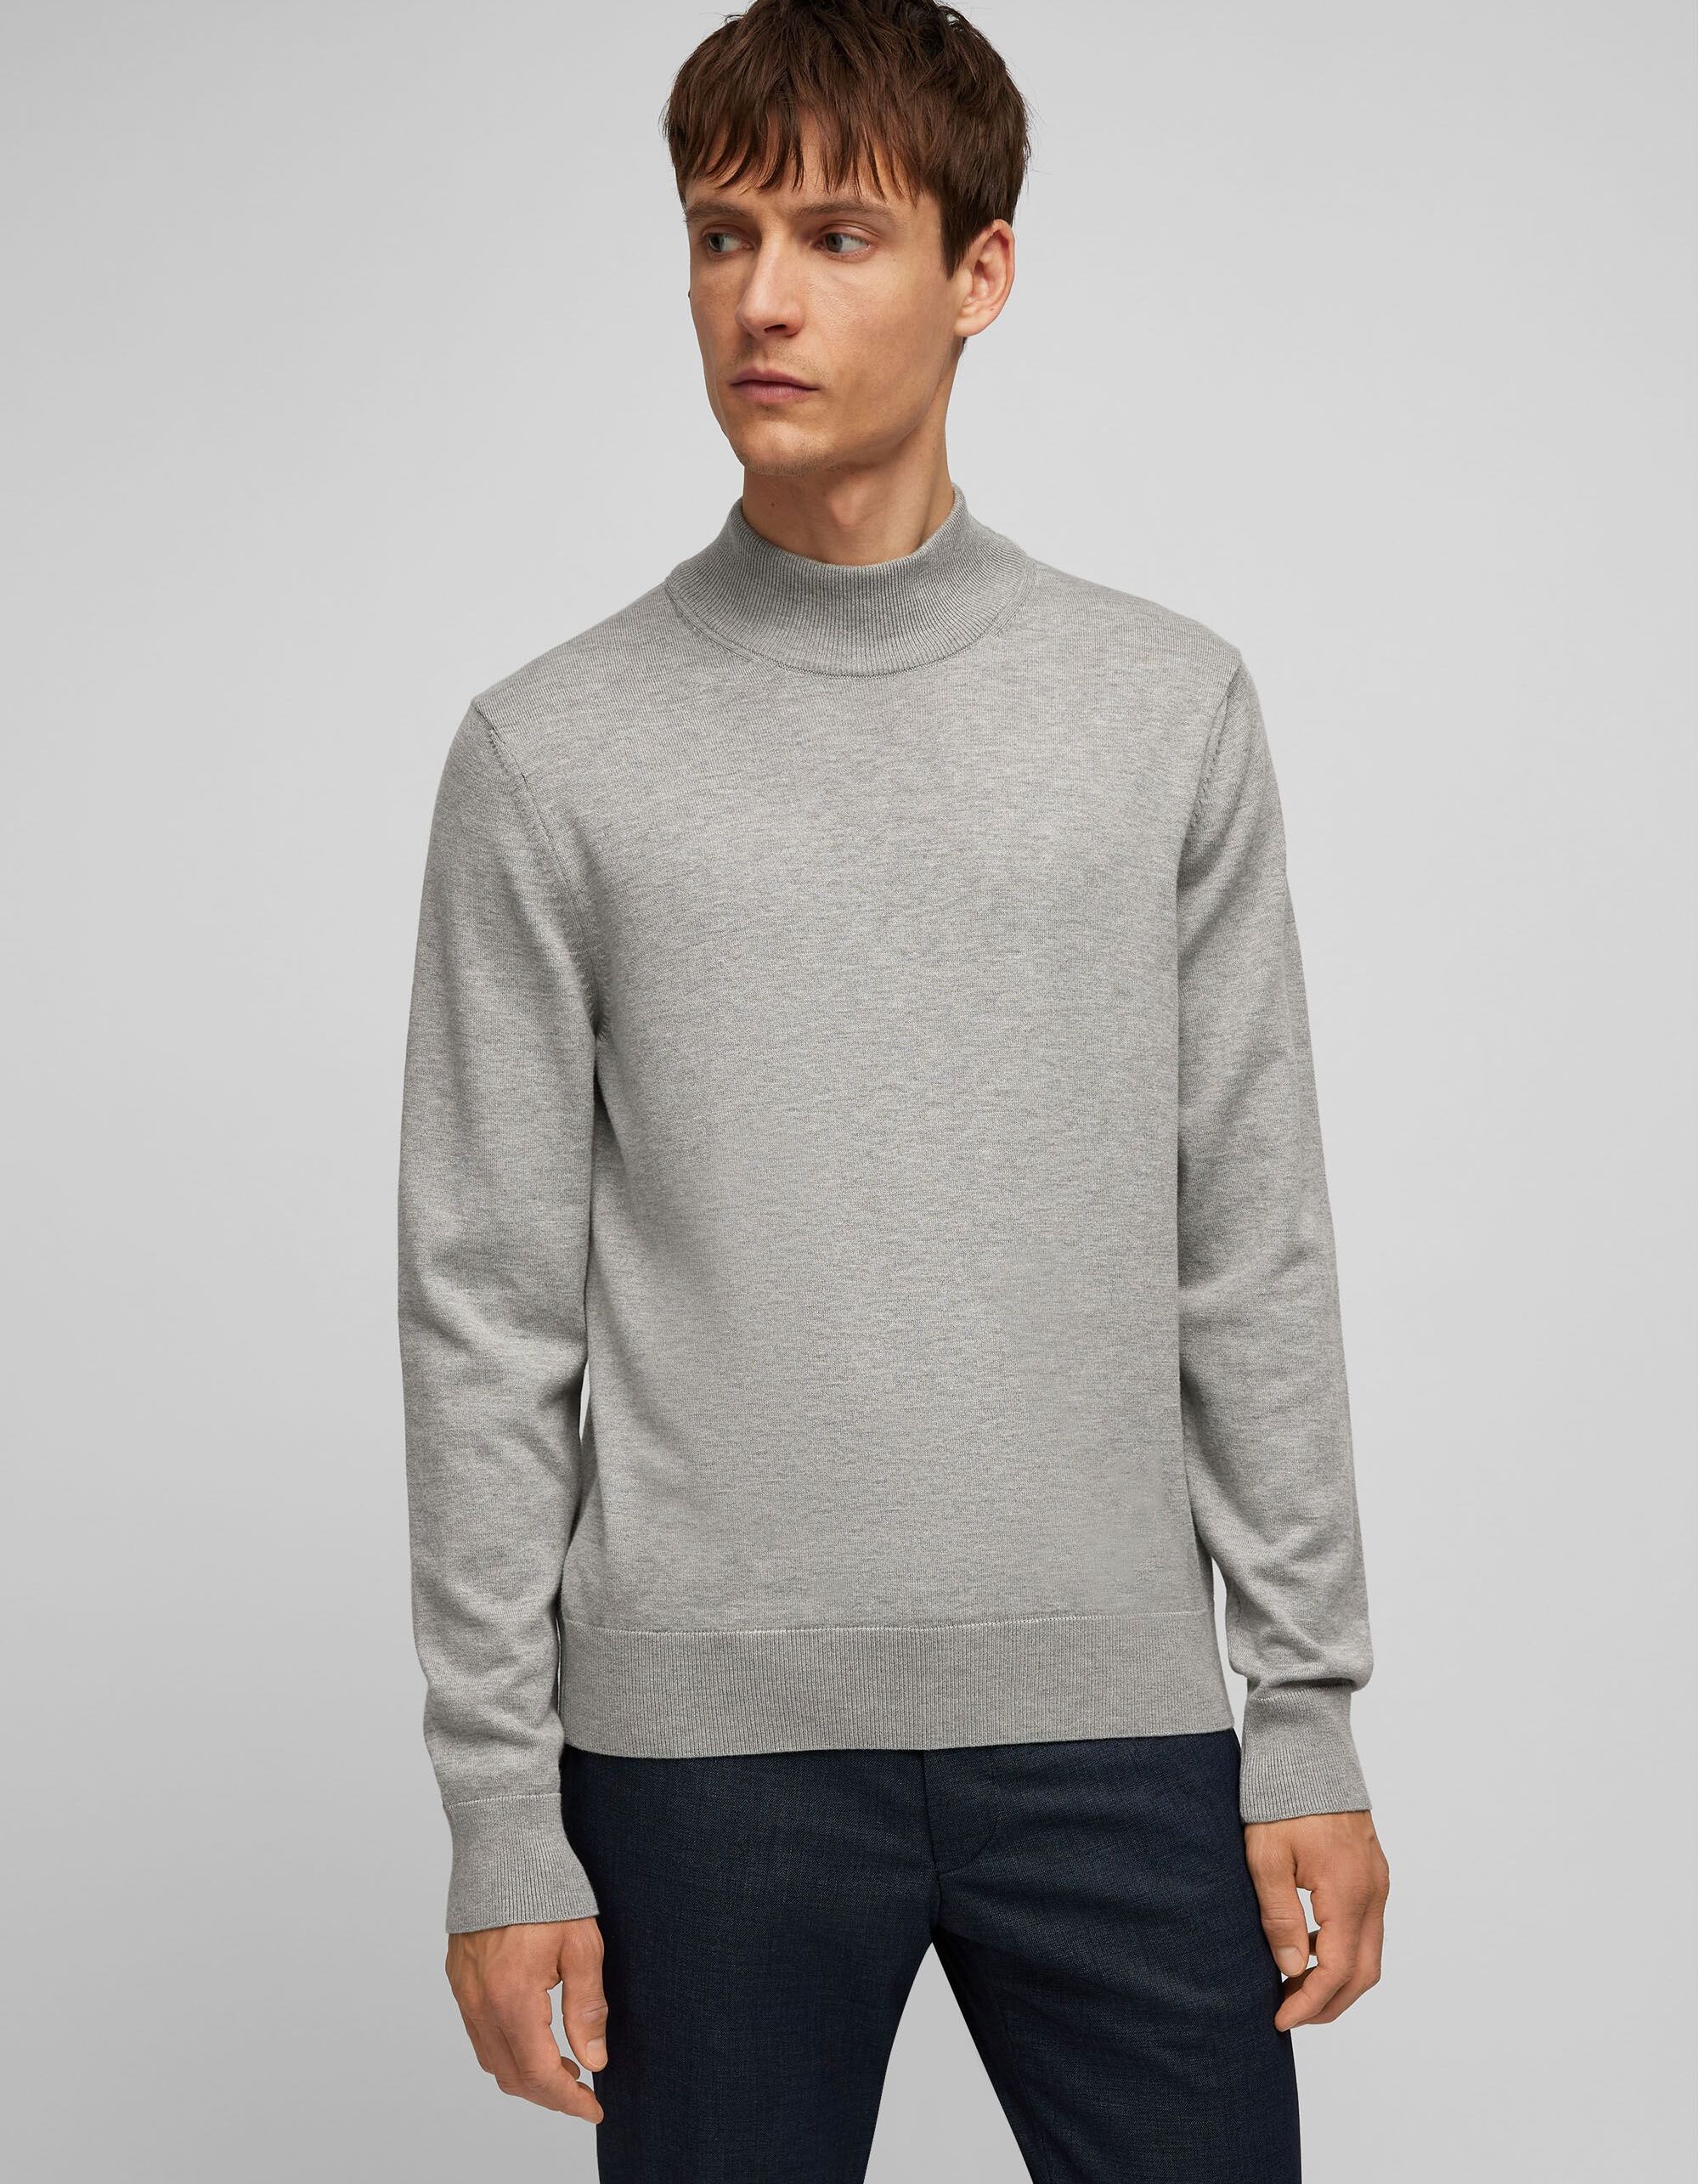 Пуловер HECHTER PARIS Turtle Neck, серый пуловер alpha industries turtle neck polar fleece темно серый